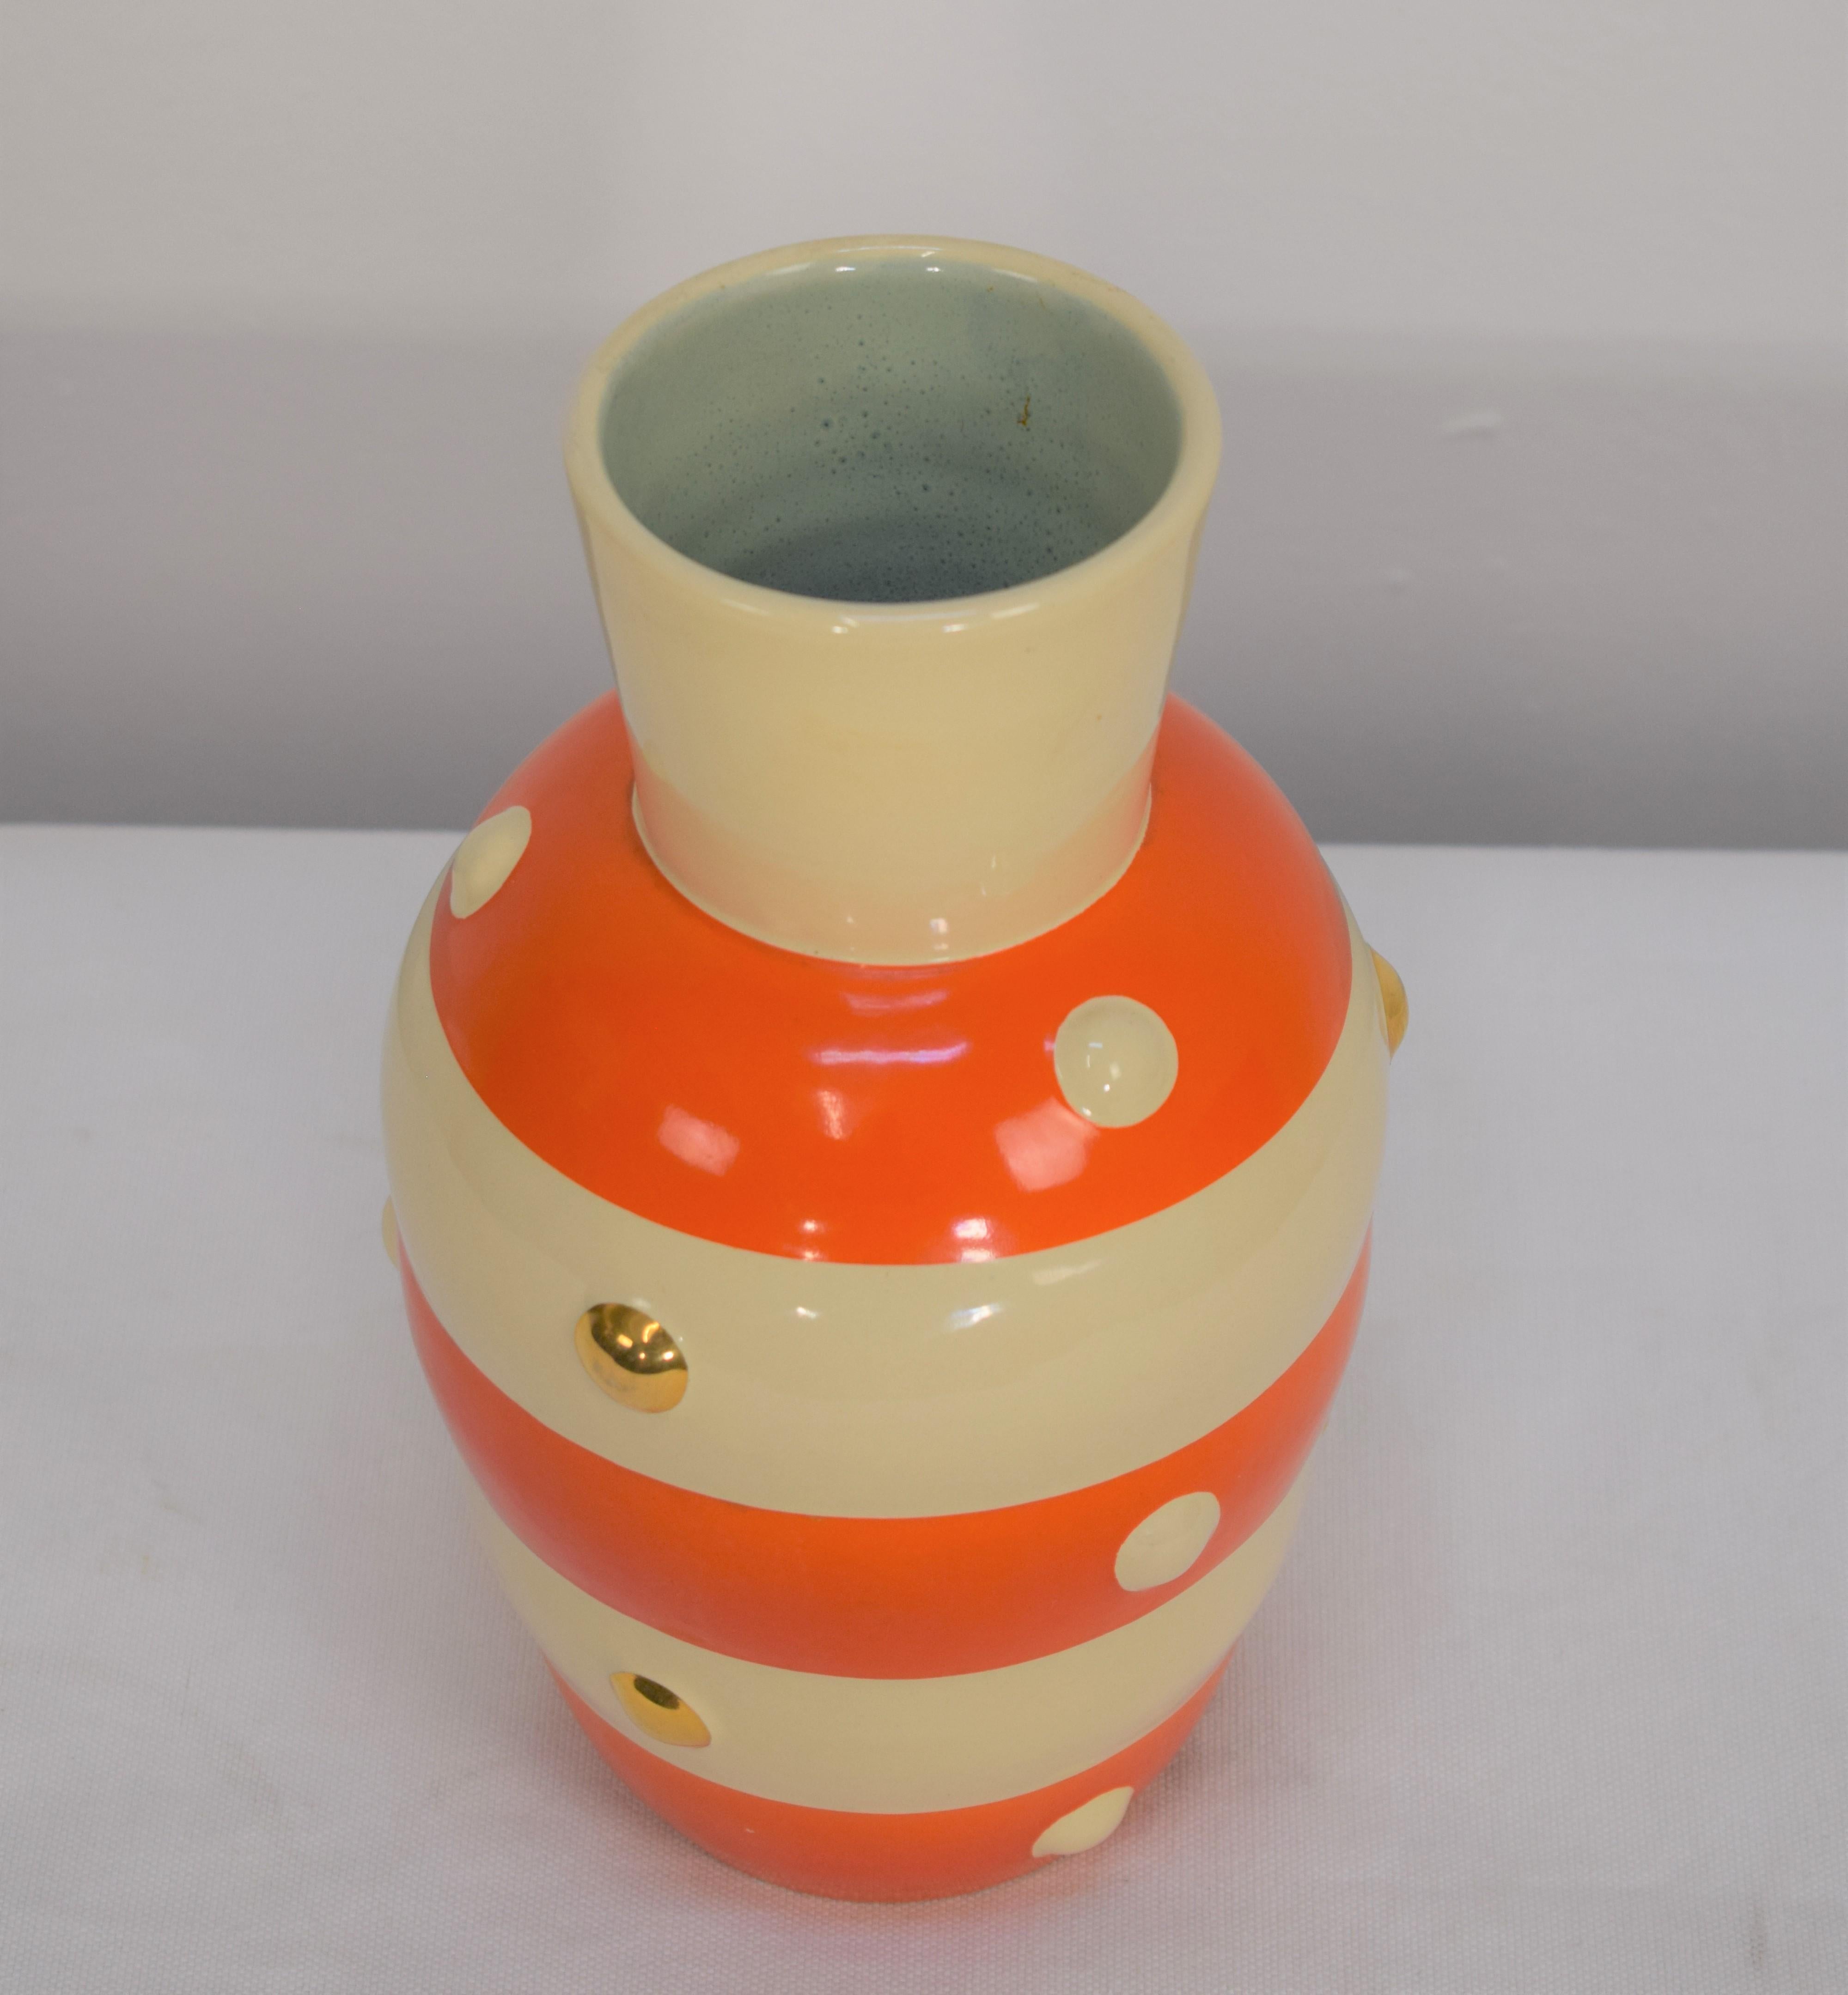 Italian ceramic vase by Rometti Umbertide, 1940s.

Dimensions: H= 27 cm; D= 15 cm.